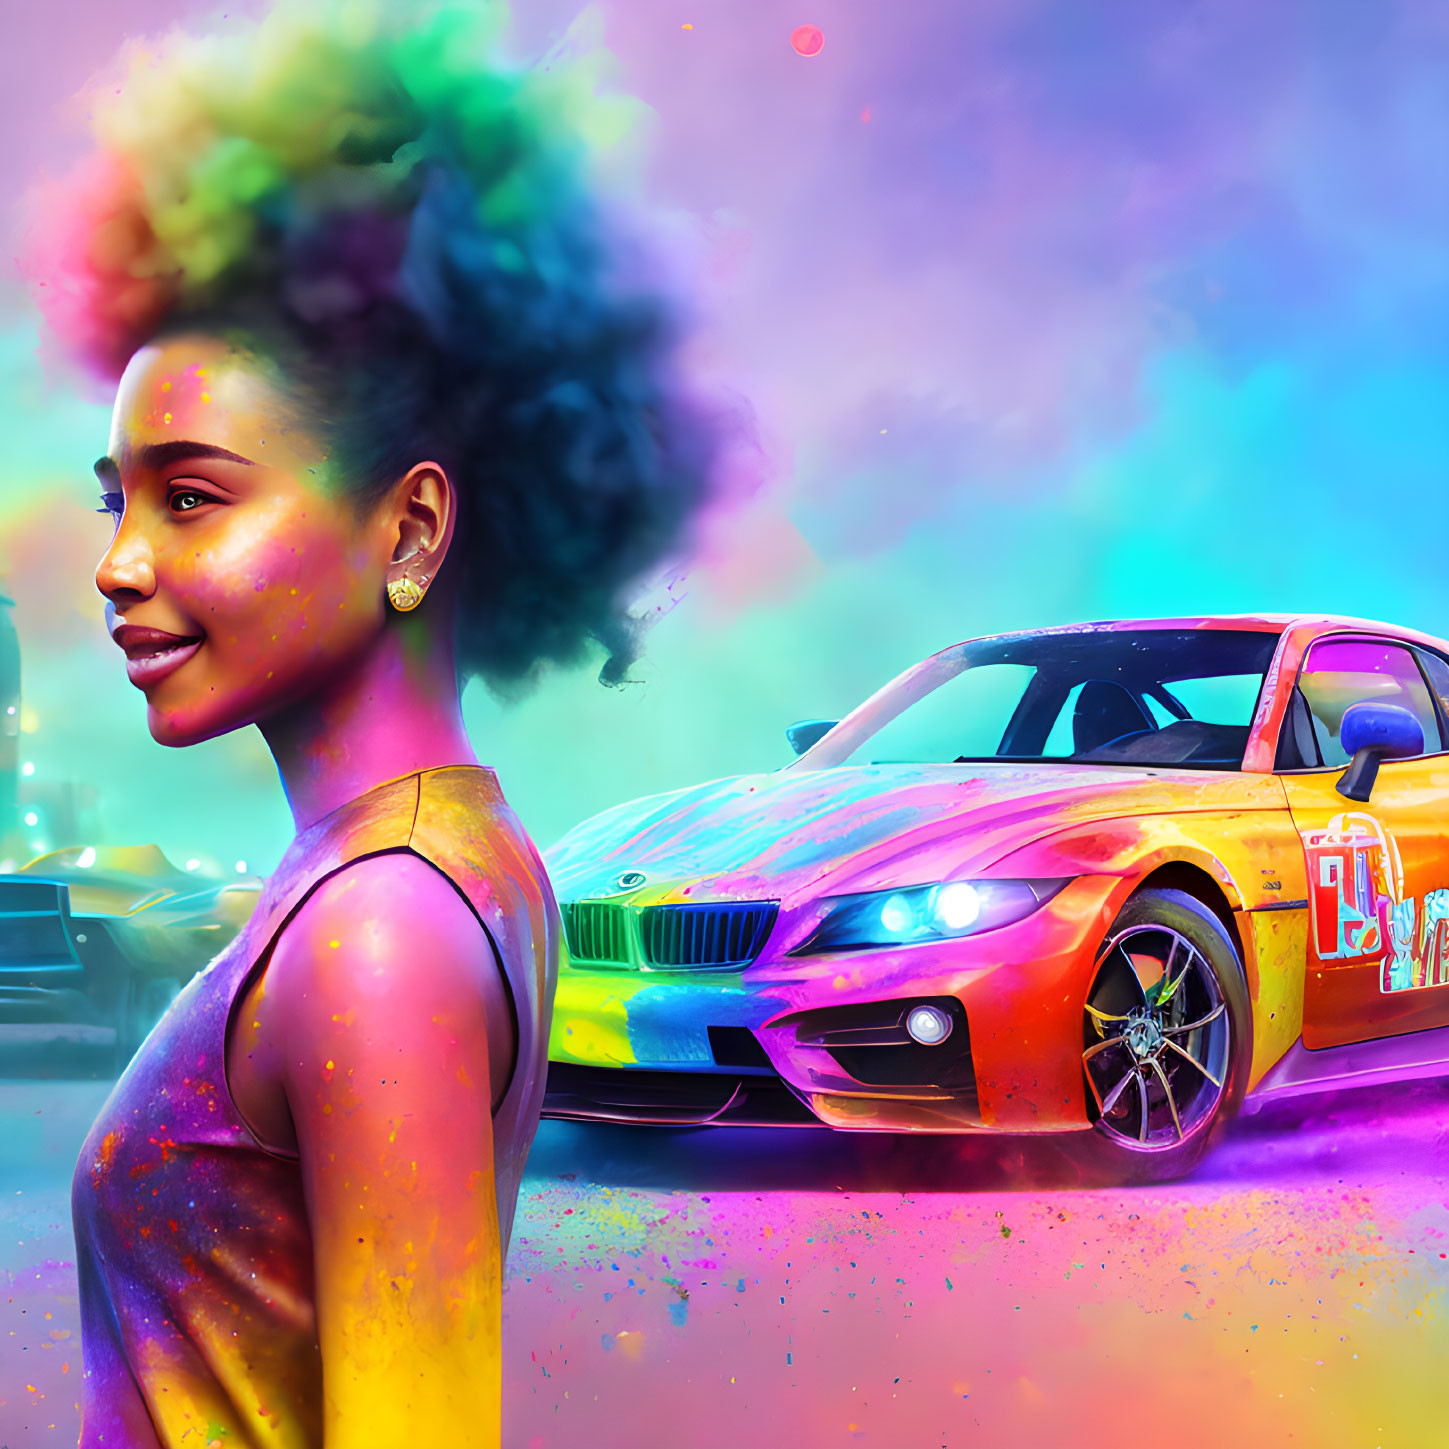 Colorful Smoke Portrait with BMW Z4 under Neon Lighting